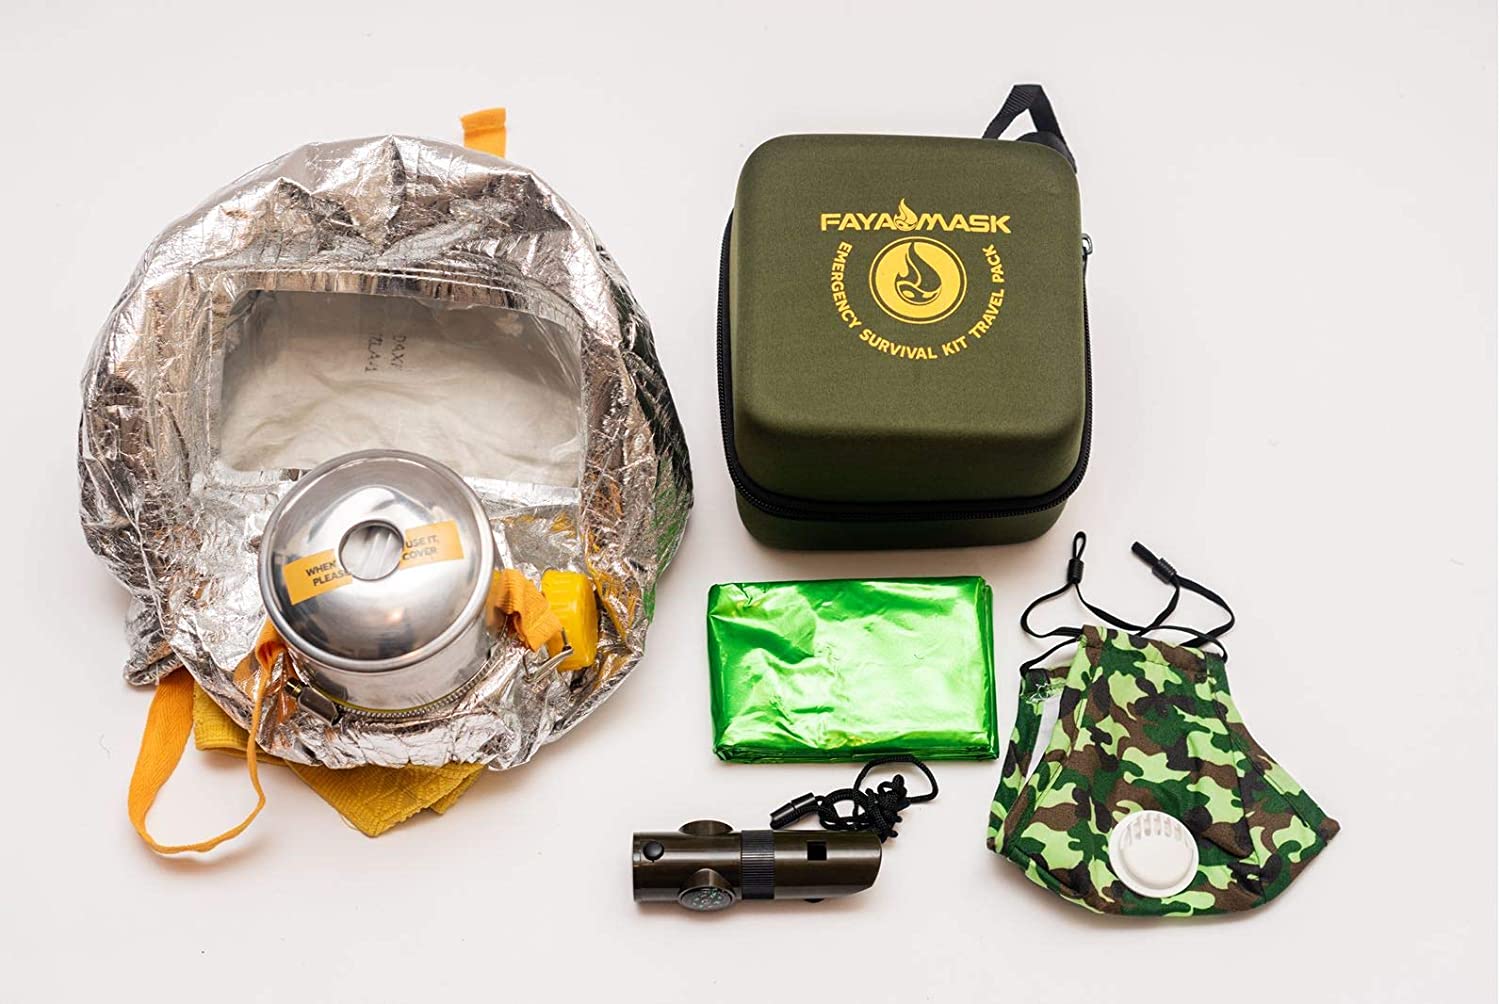 Fayamask travel fire survival kit